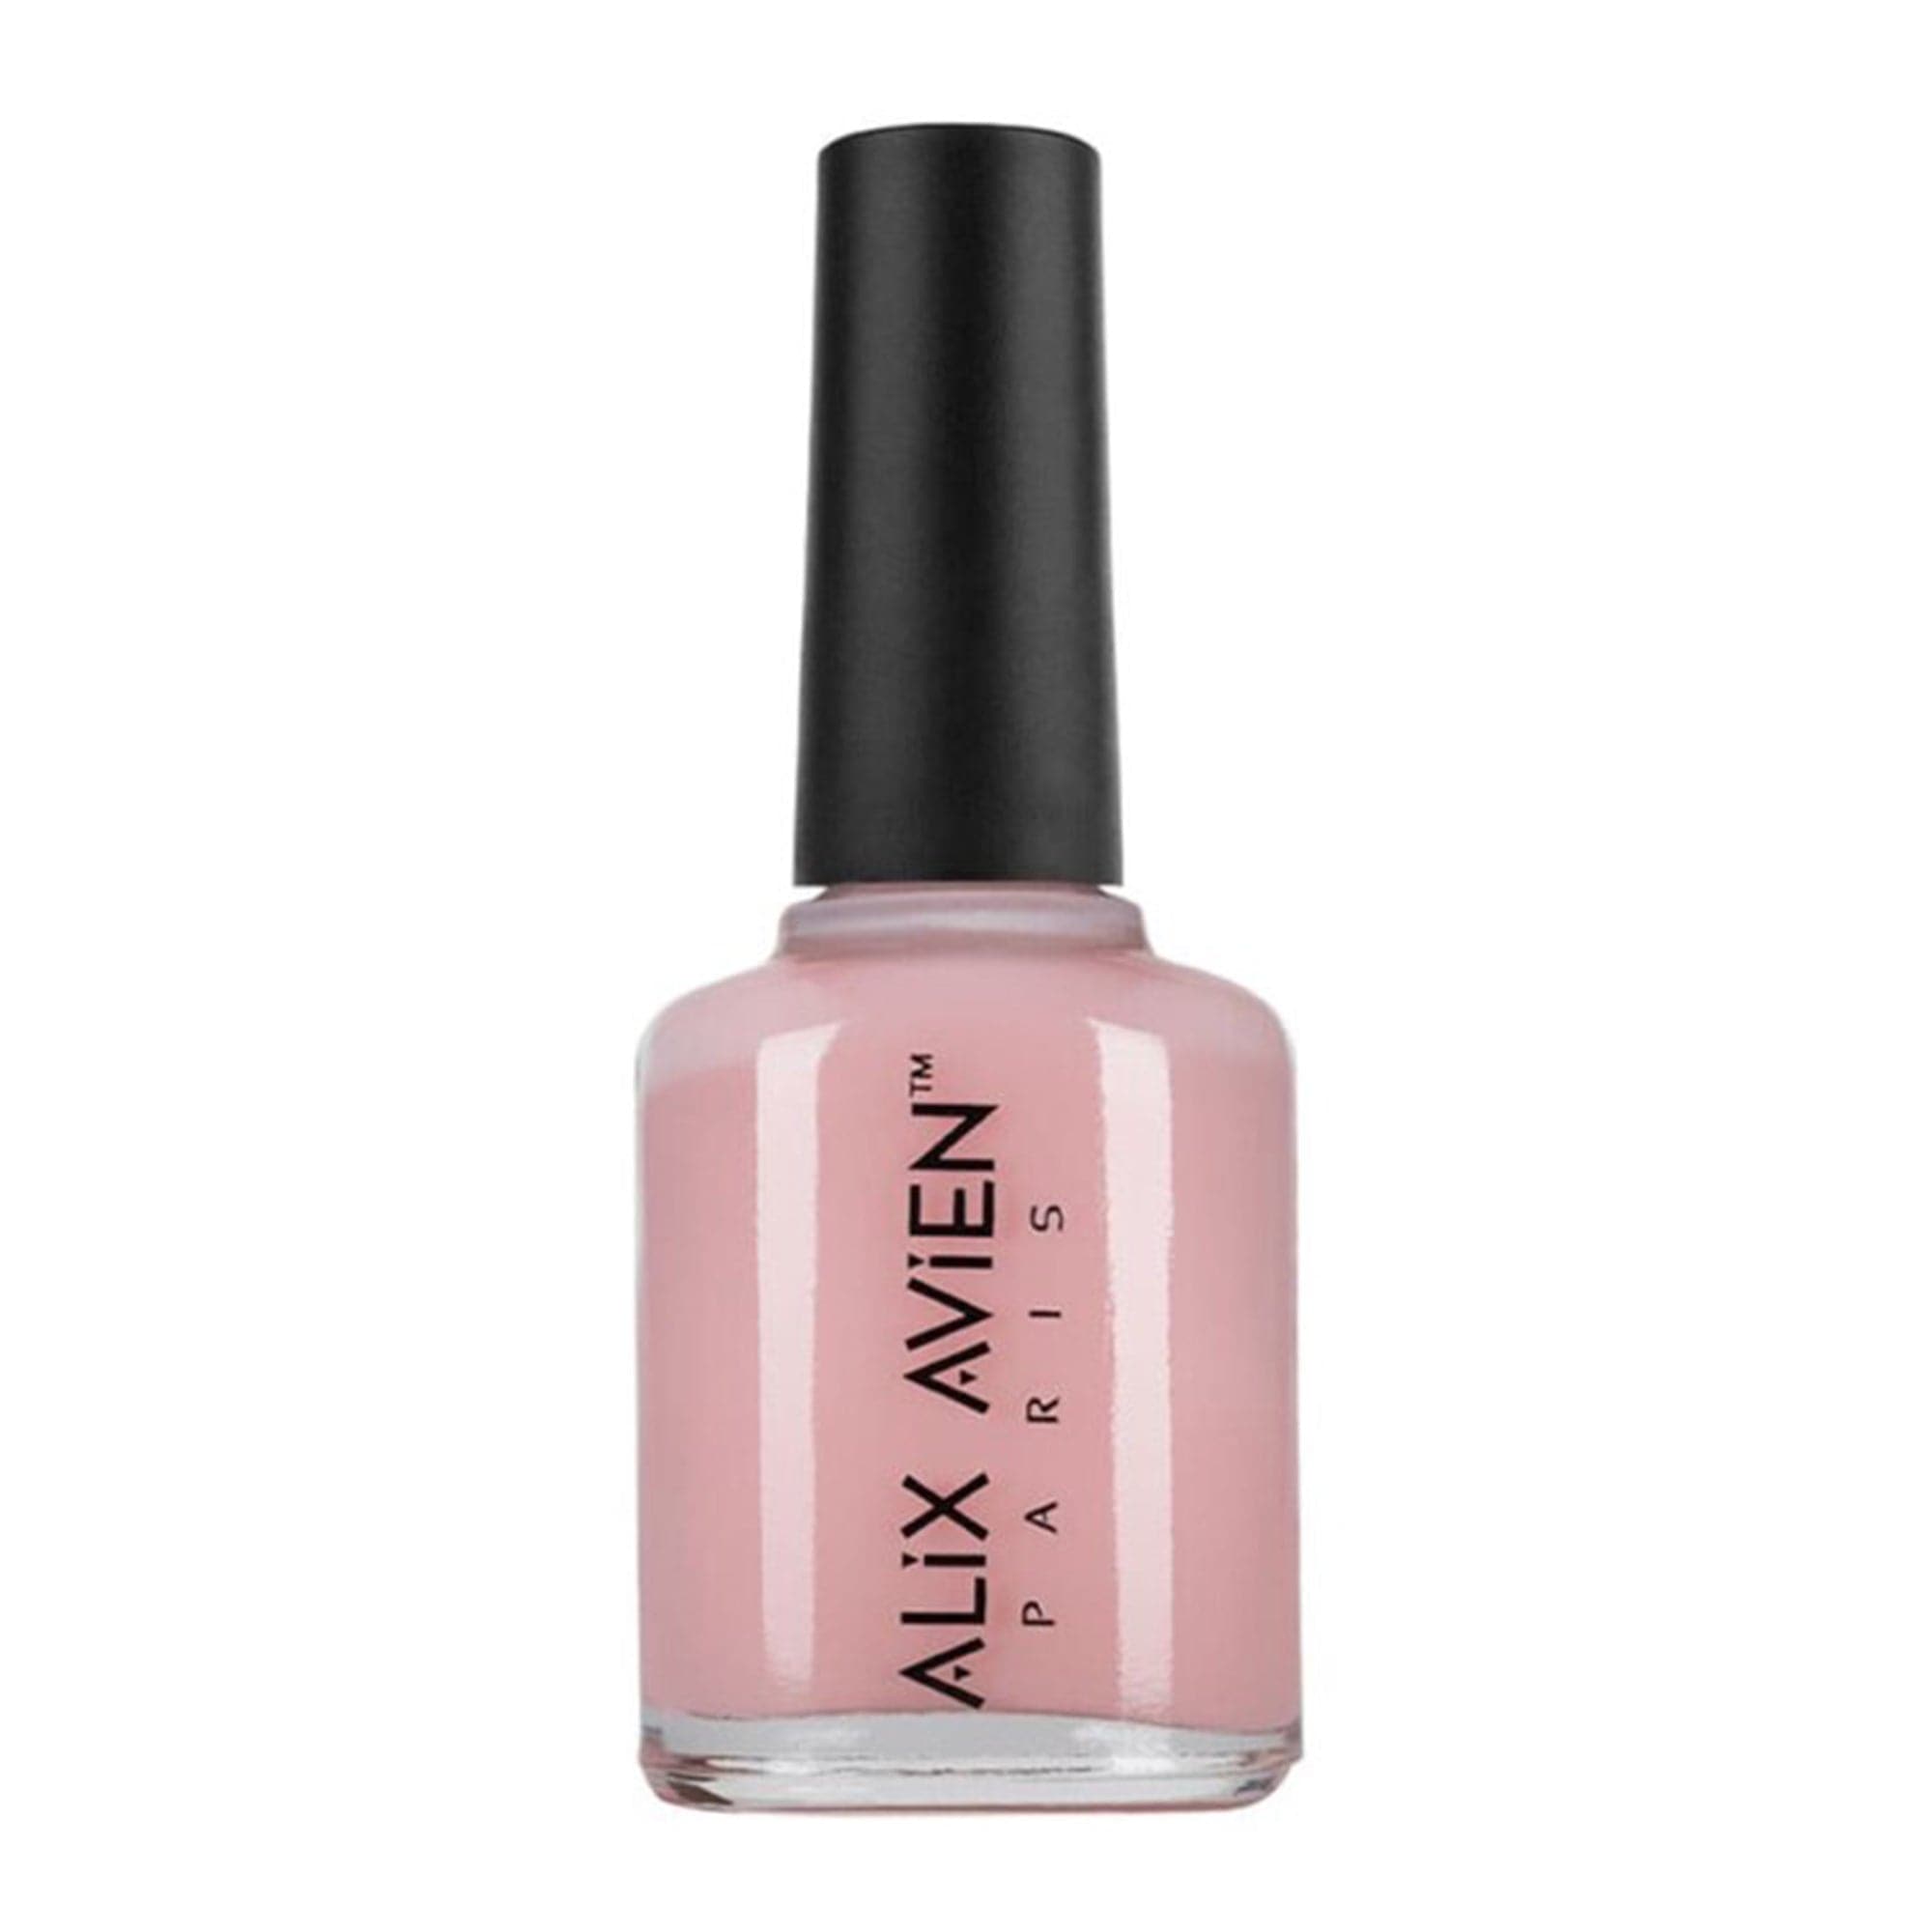 Alix Avien - Nail Polish No.04 (Light Pink) - Eson Direct